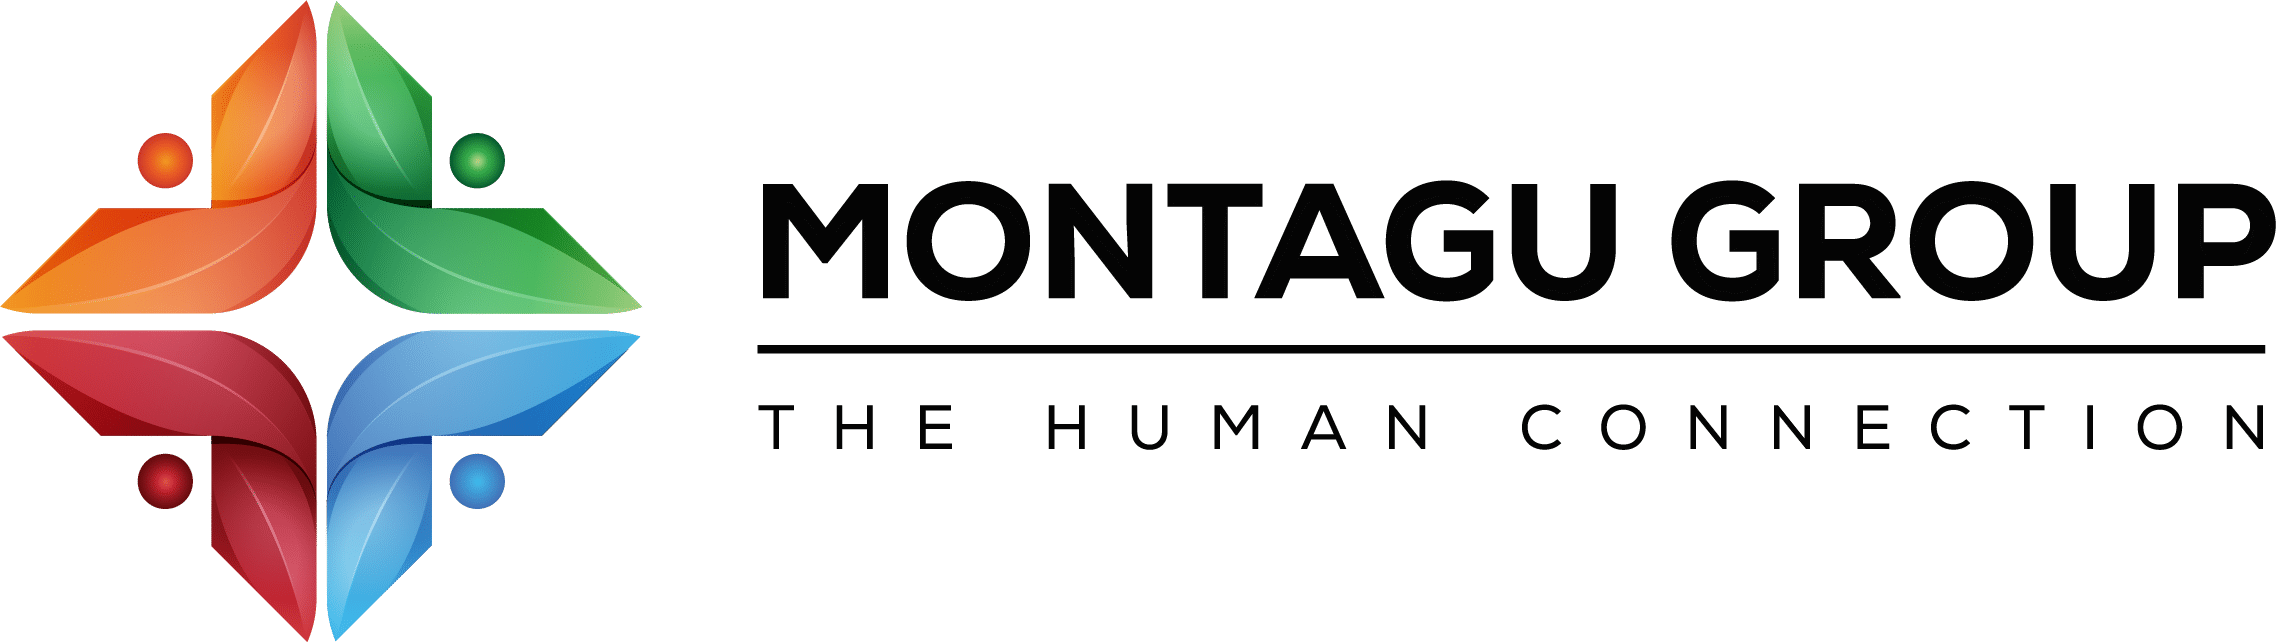 Montagu Group